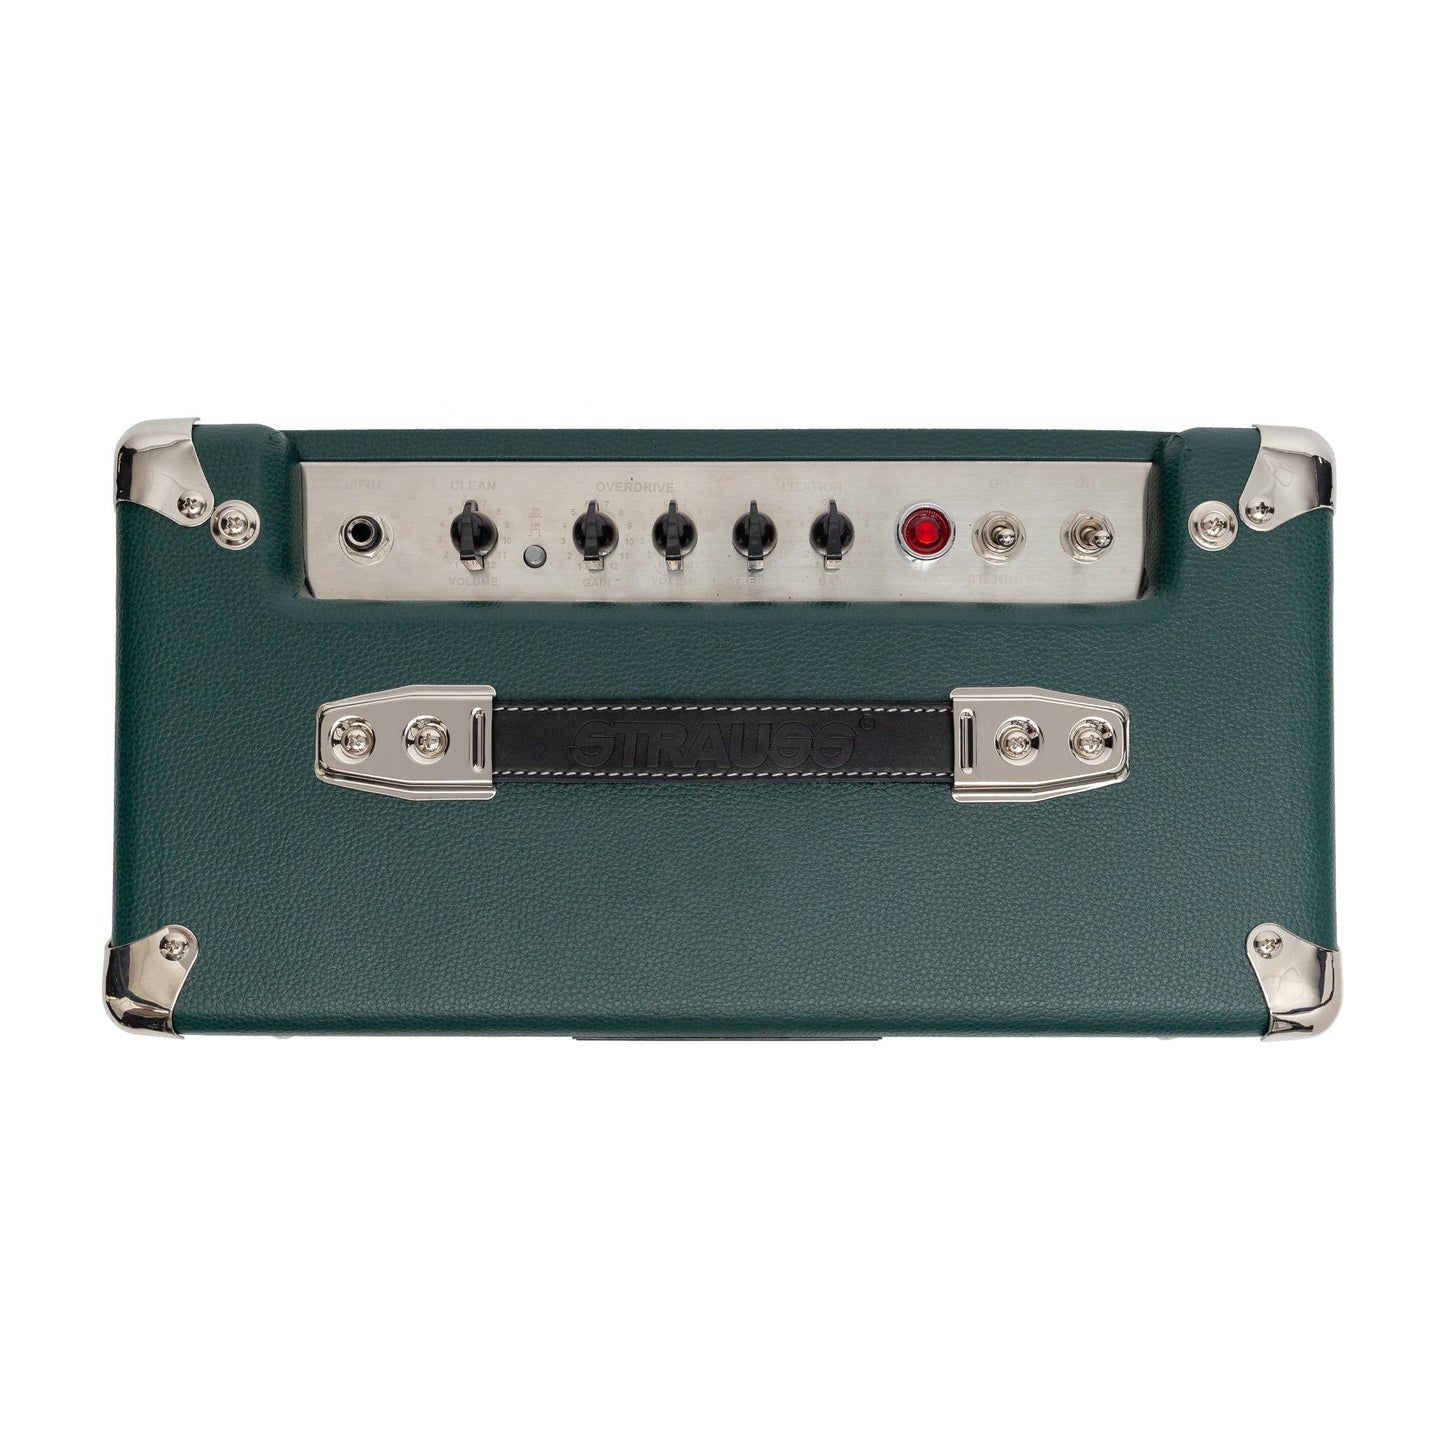 Strauss SVT-10 10 Watt Combo Valve Amplifier (Green)